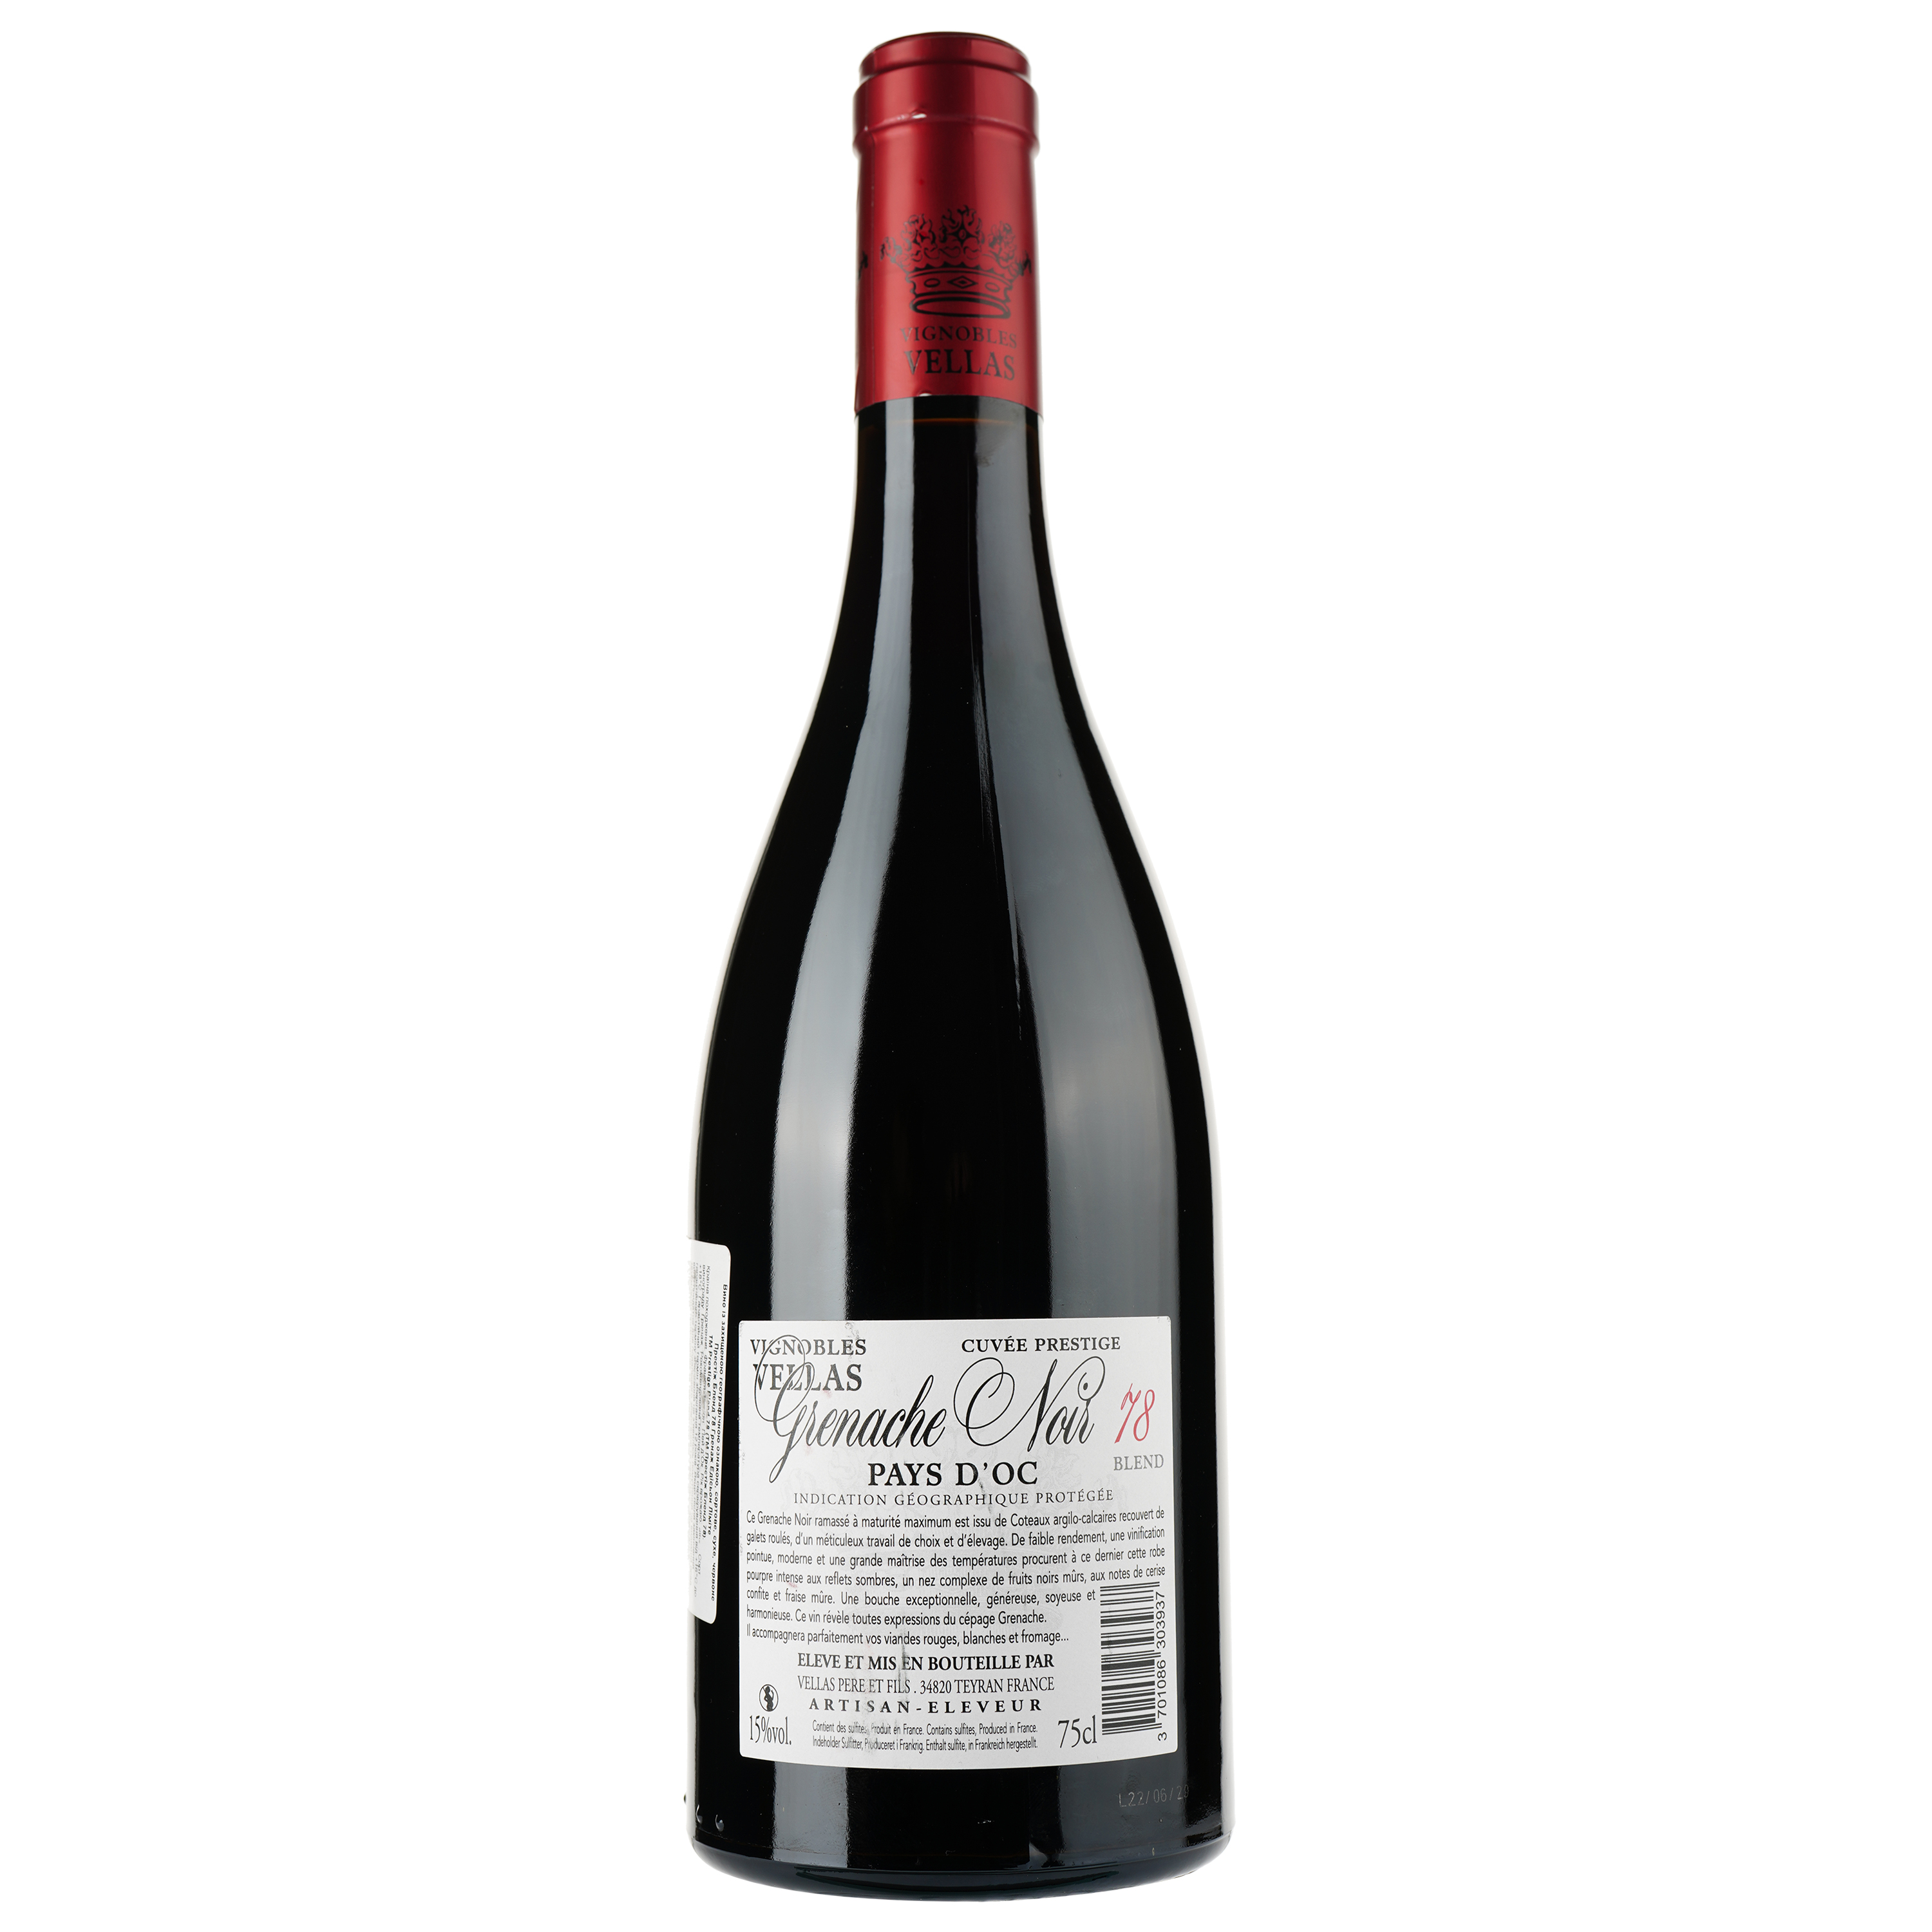 Вино Vignobles Vellas Grenache Noir 78 Blend Edition Limitee IGP Pays D'Oc, красное, сухое, 0,75 л - фото 2